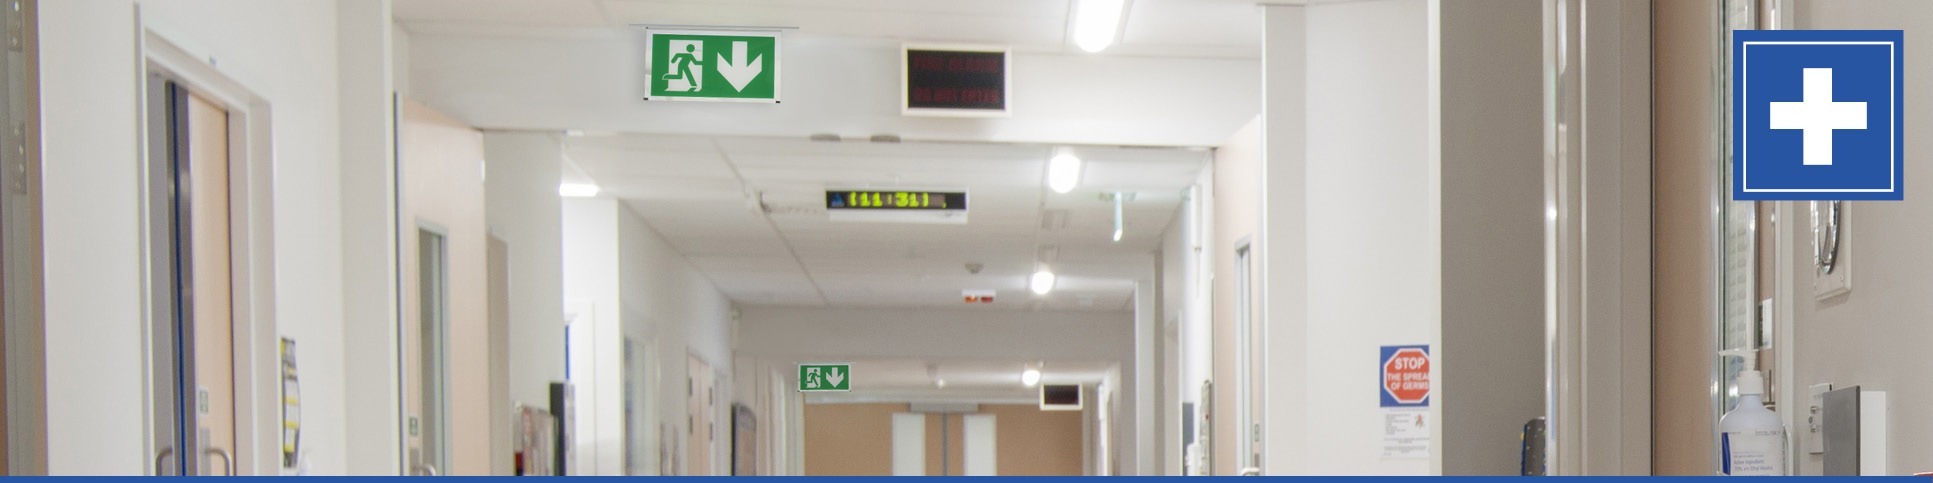 Tamlite healthcare header corridors image with icon